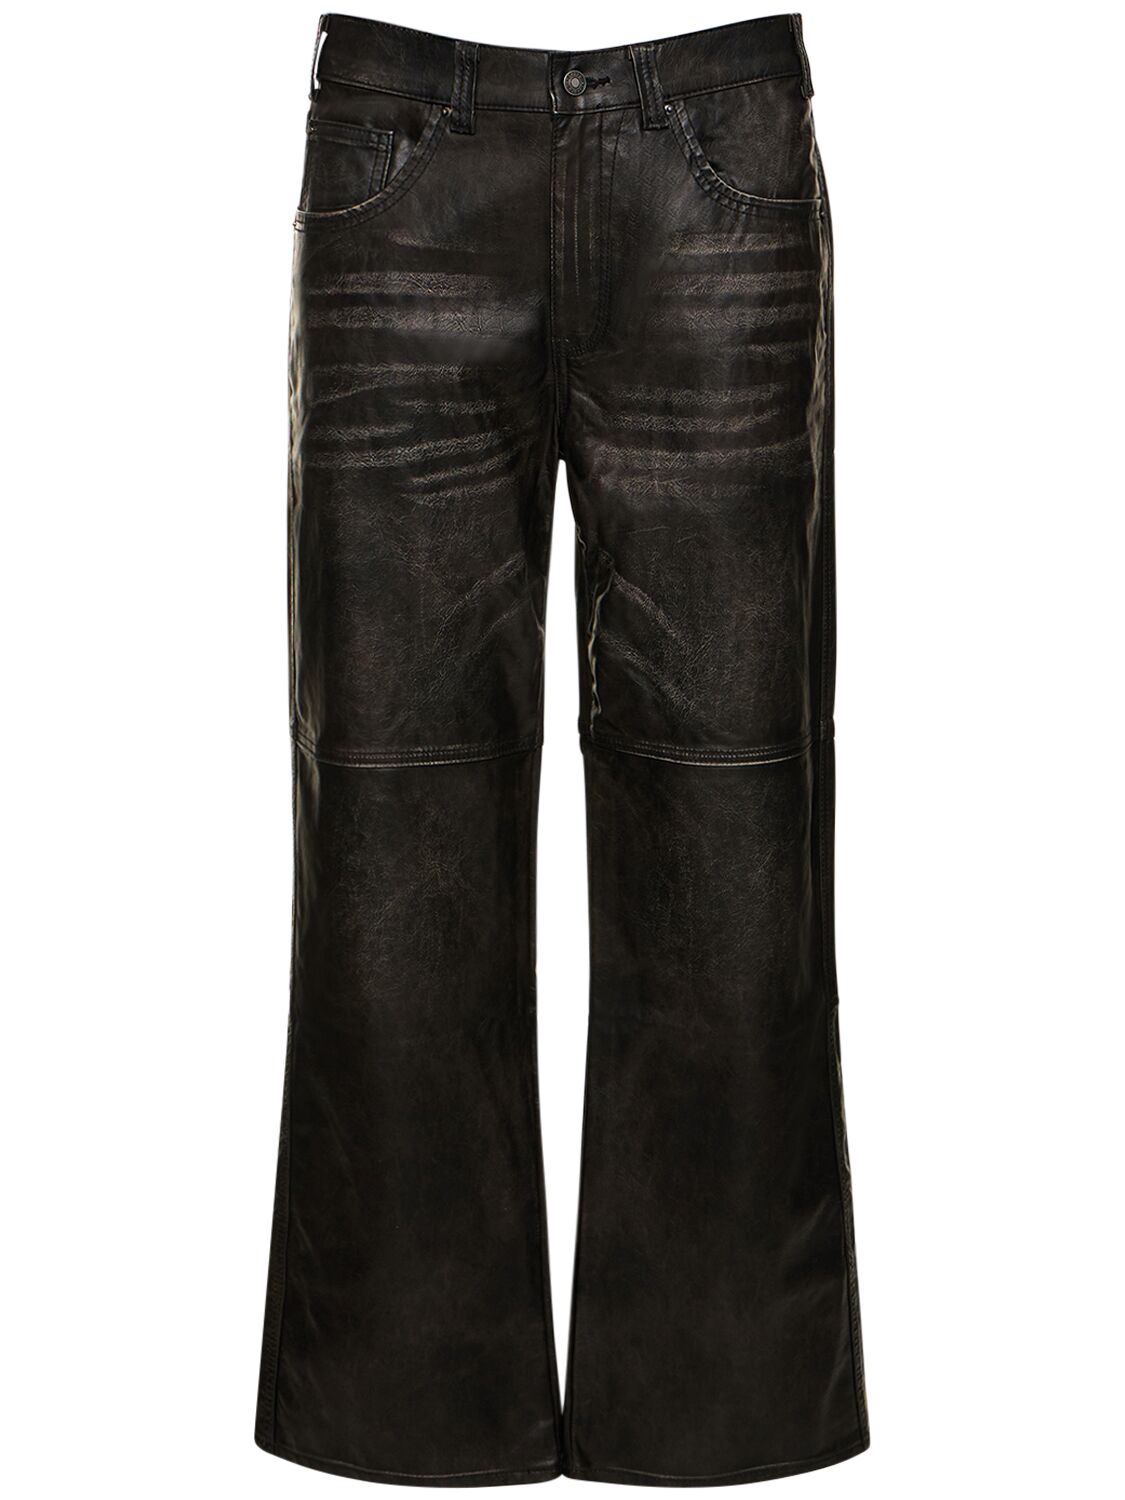 Jaded London Ash Black Faux Leather Pants